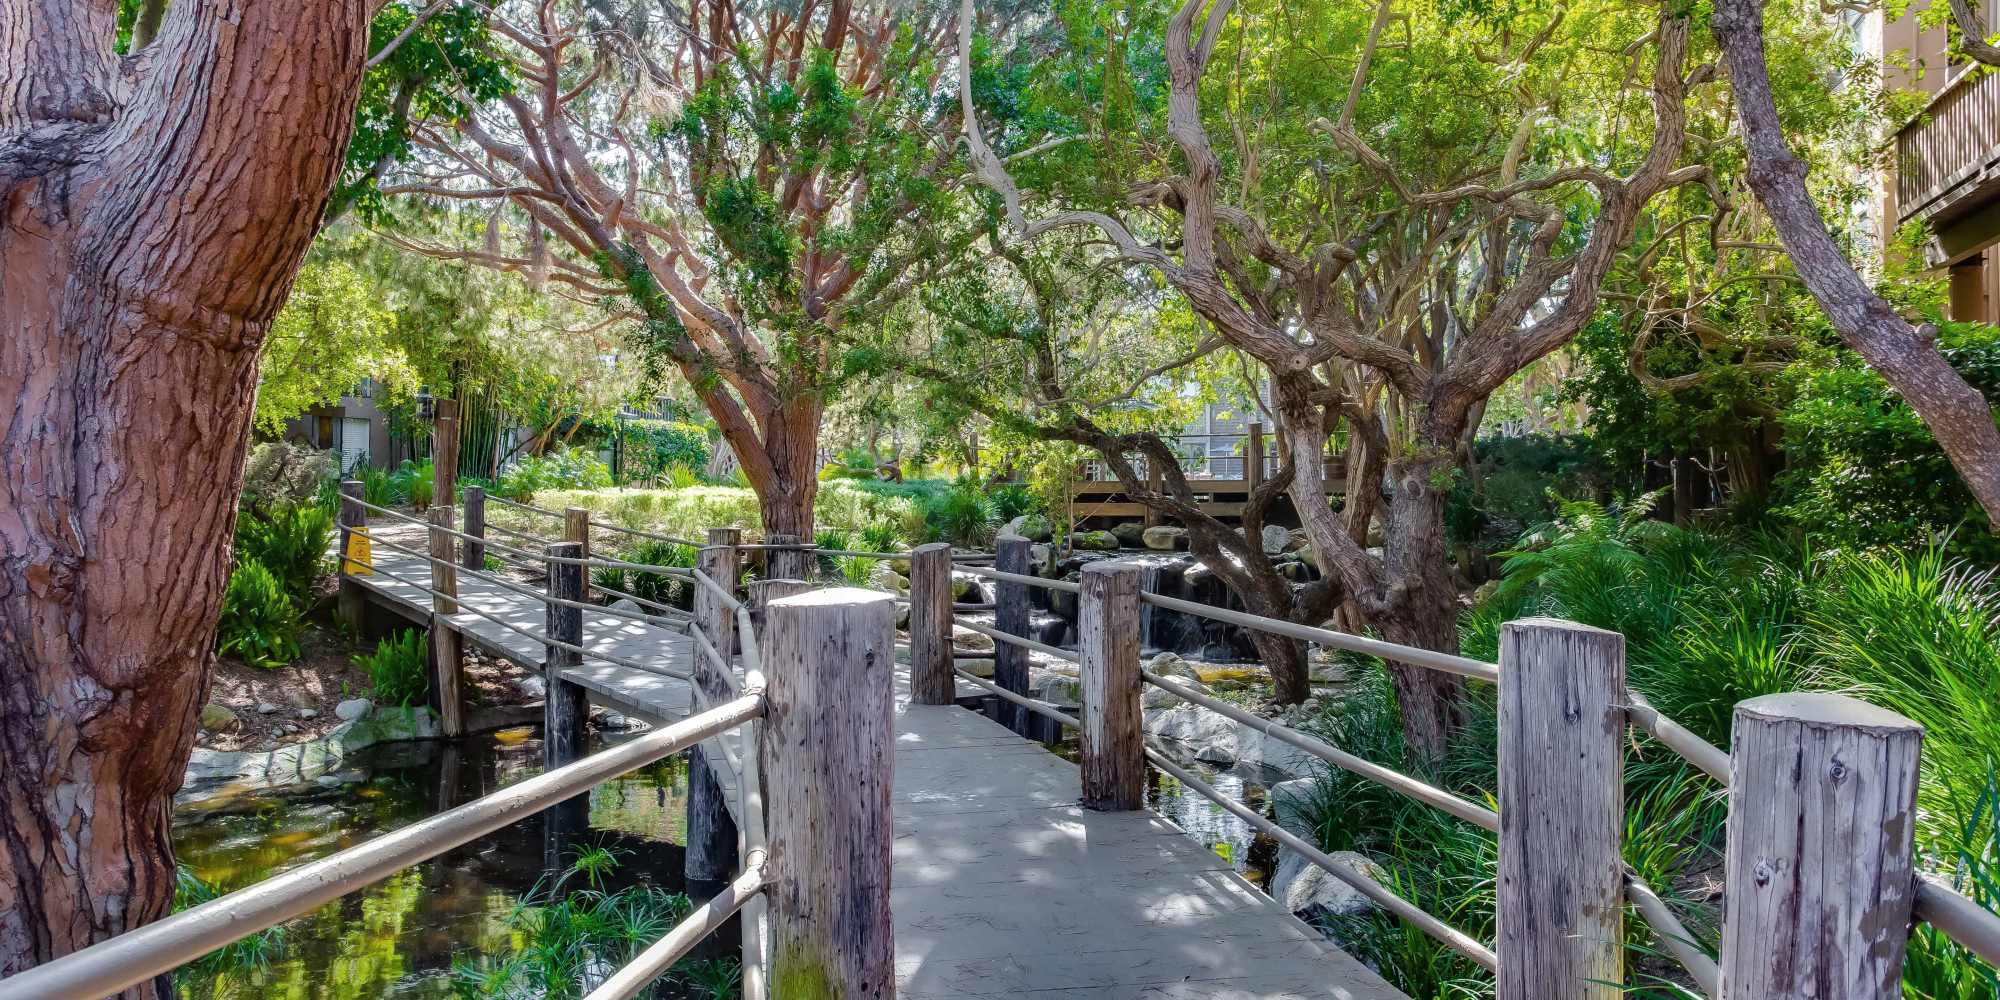 Lush vegetation and bridge at Mariners Village in Marina del Rey, CA